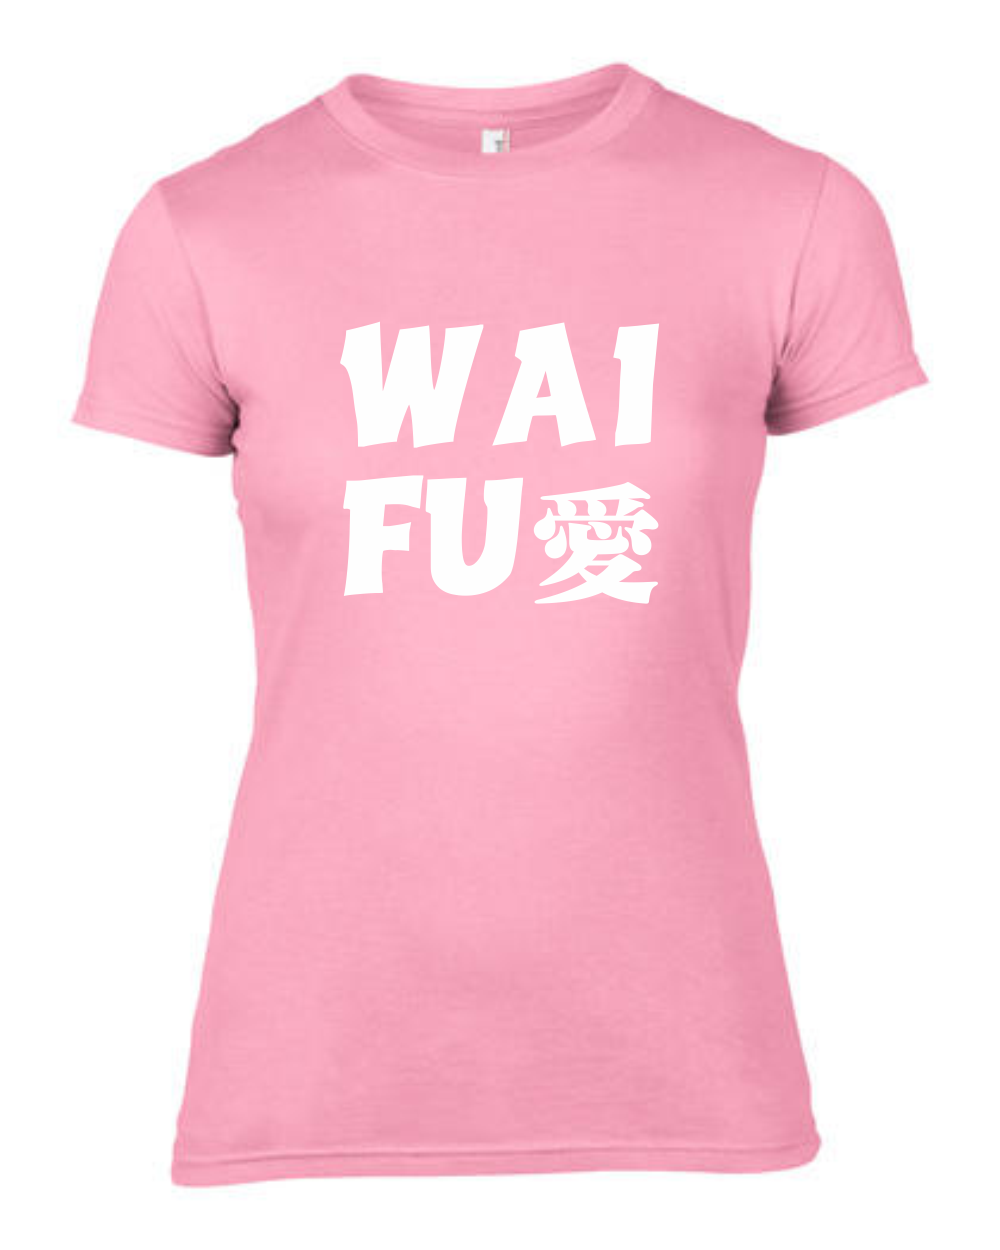 Waifu 愛 (Love) - Japanese Kana T-Shirt - Aardvark Tees - Tees that Please